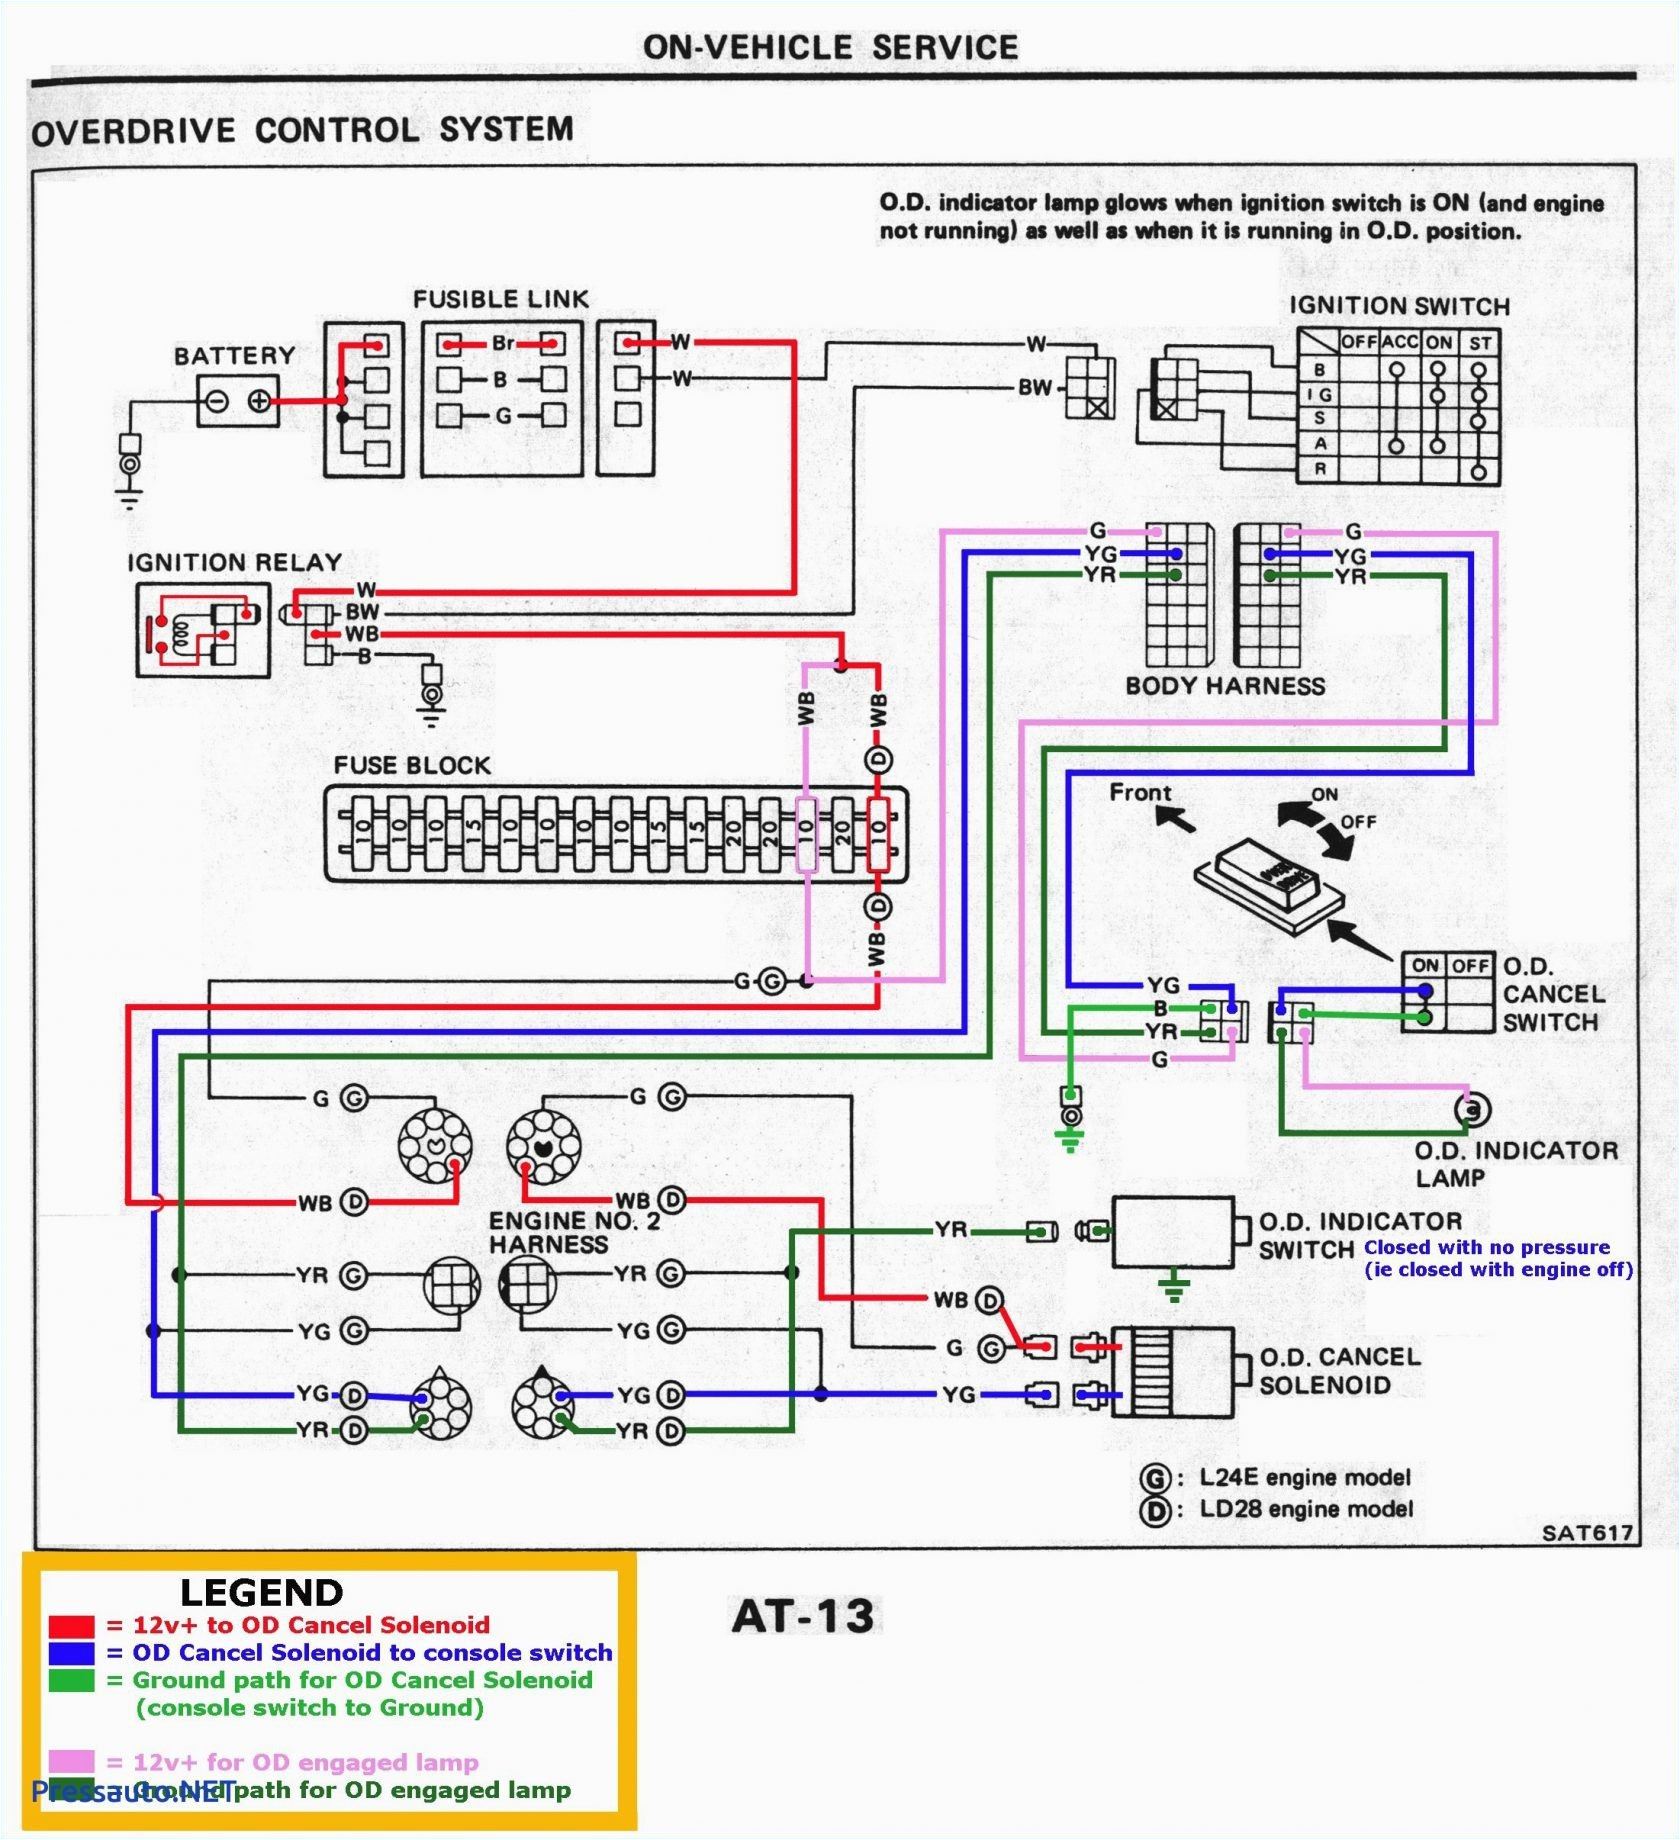 summerland wiring diagram wiring diagram for you summerland wiring diagram